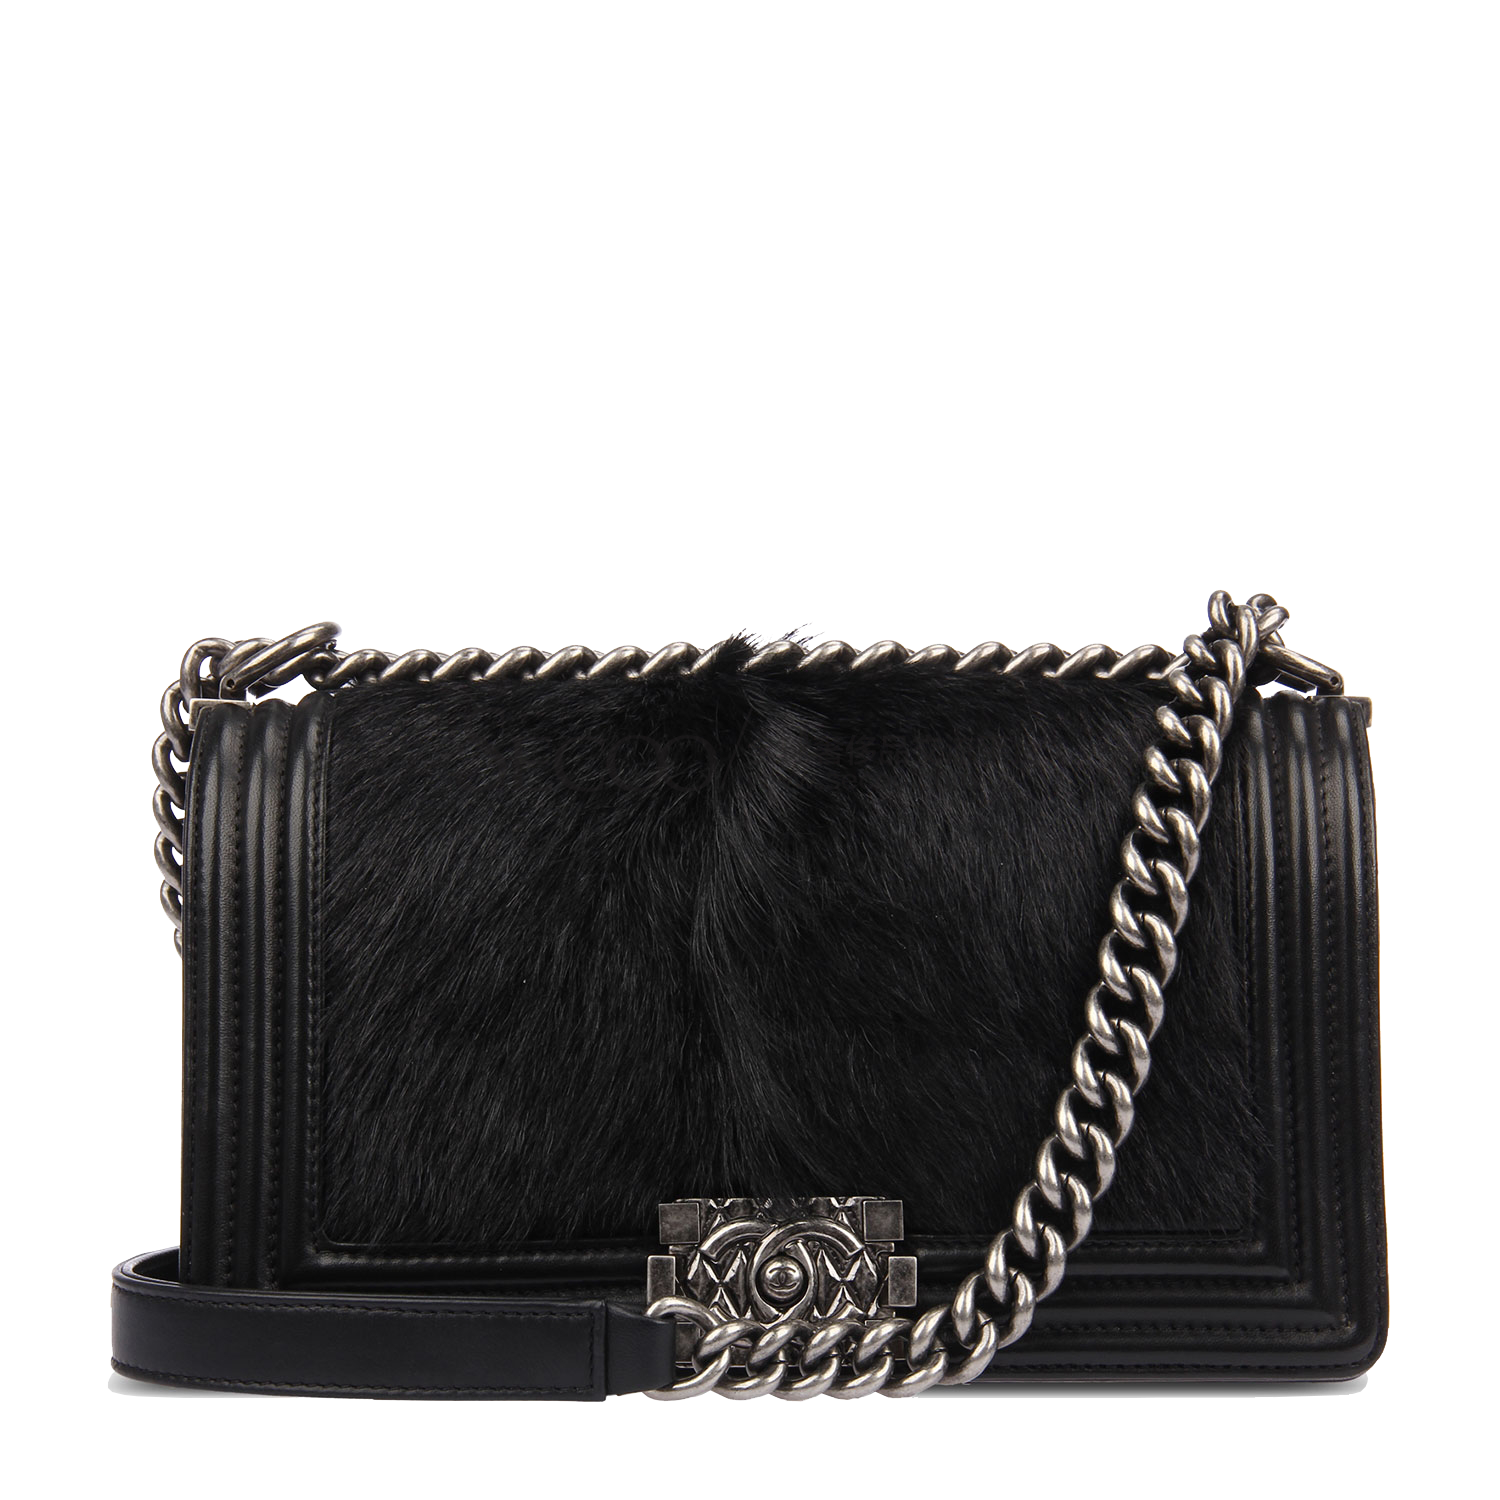 Christian Wuhan Bag Black Dior Handbag Horsehair PNG Image